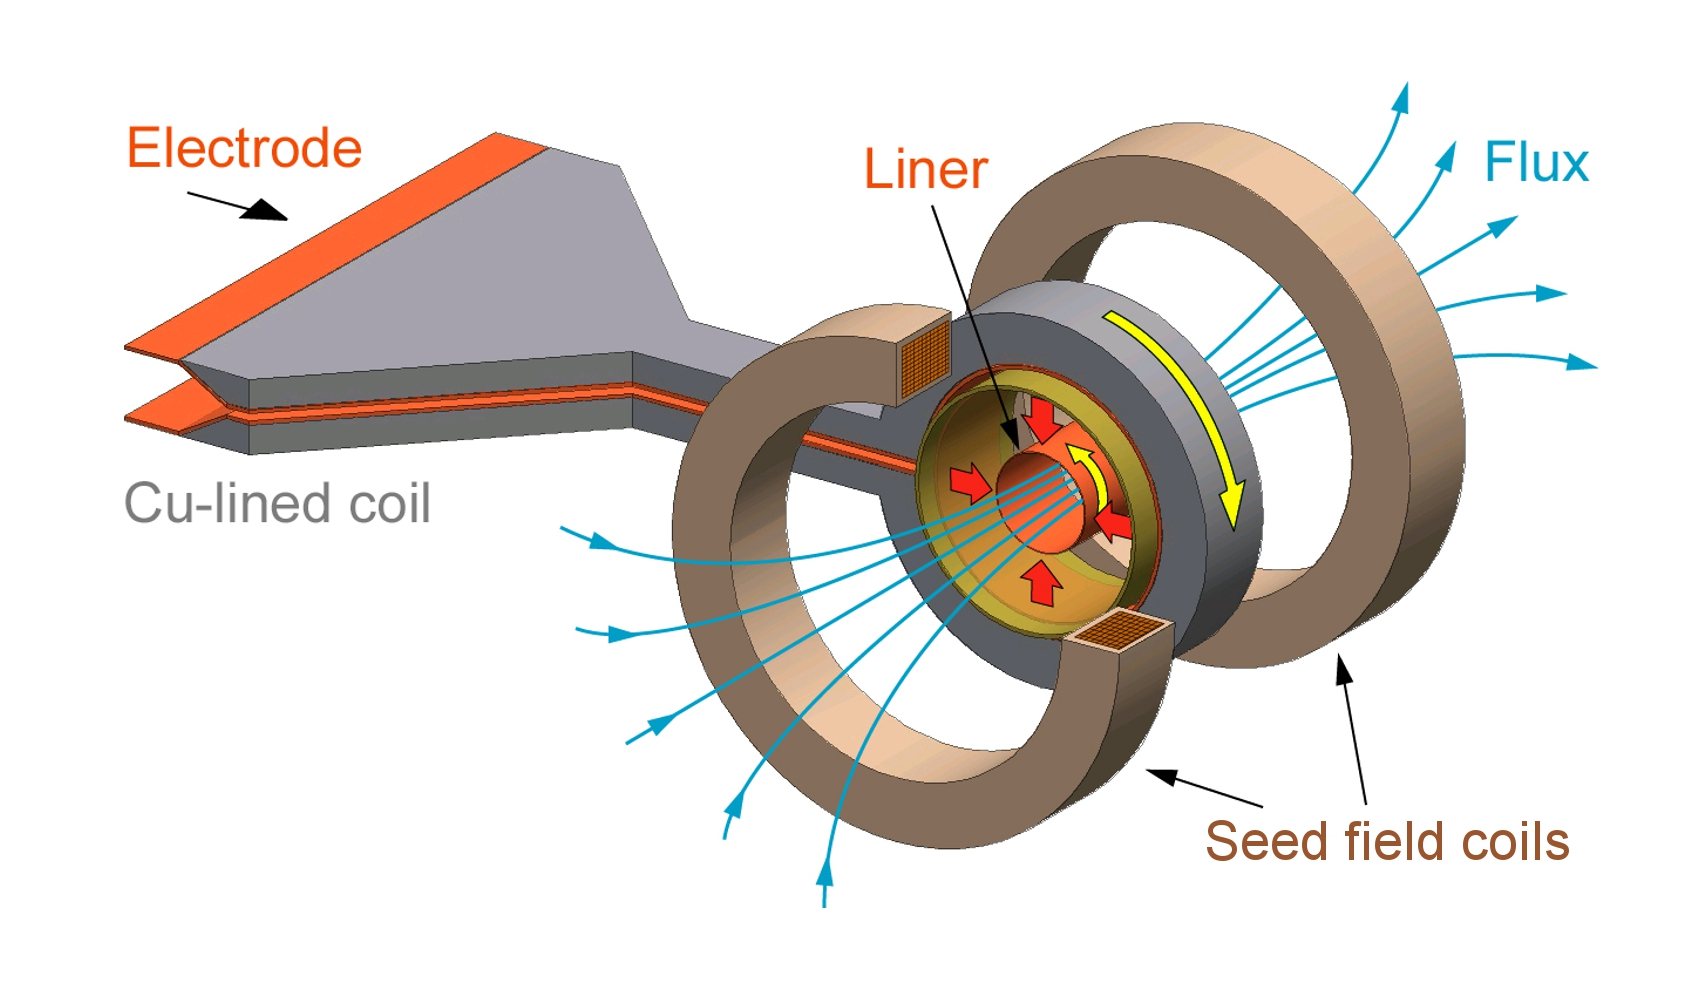 A diagram of the circular field coils